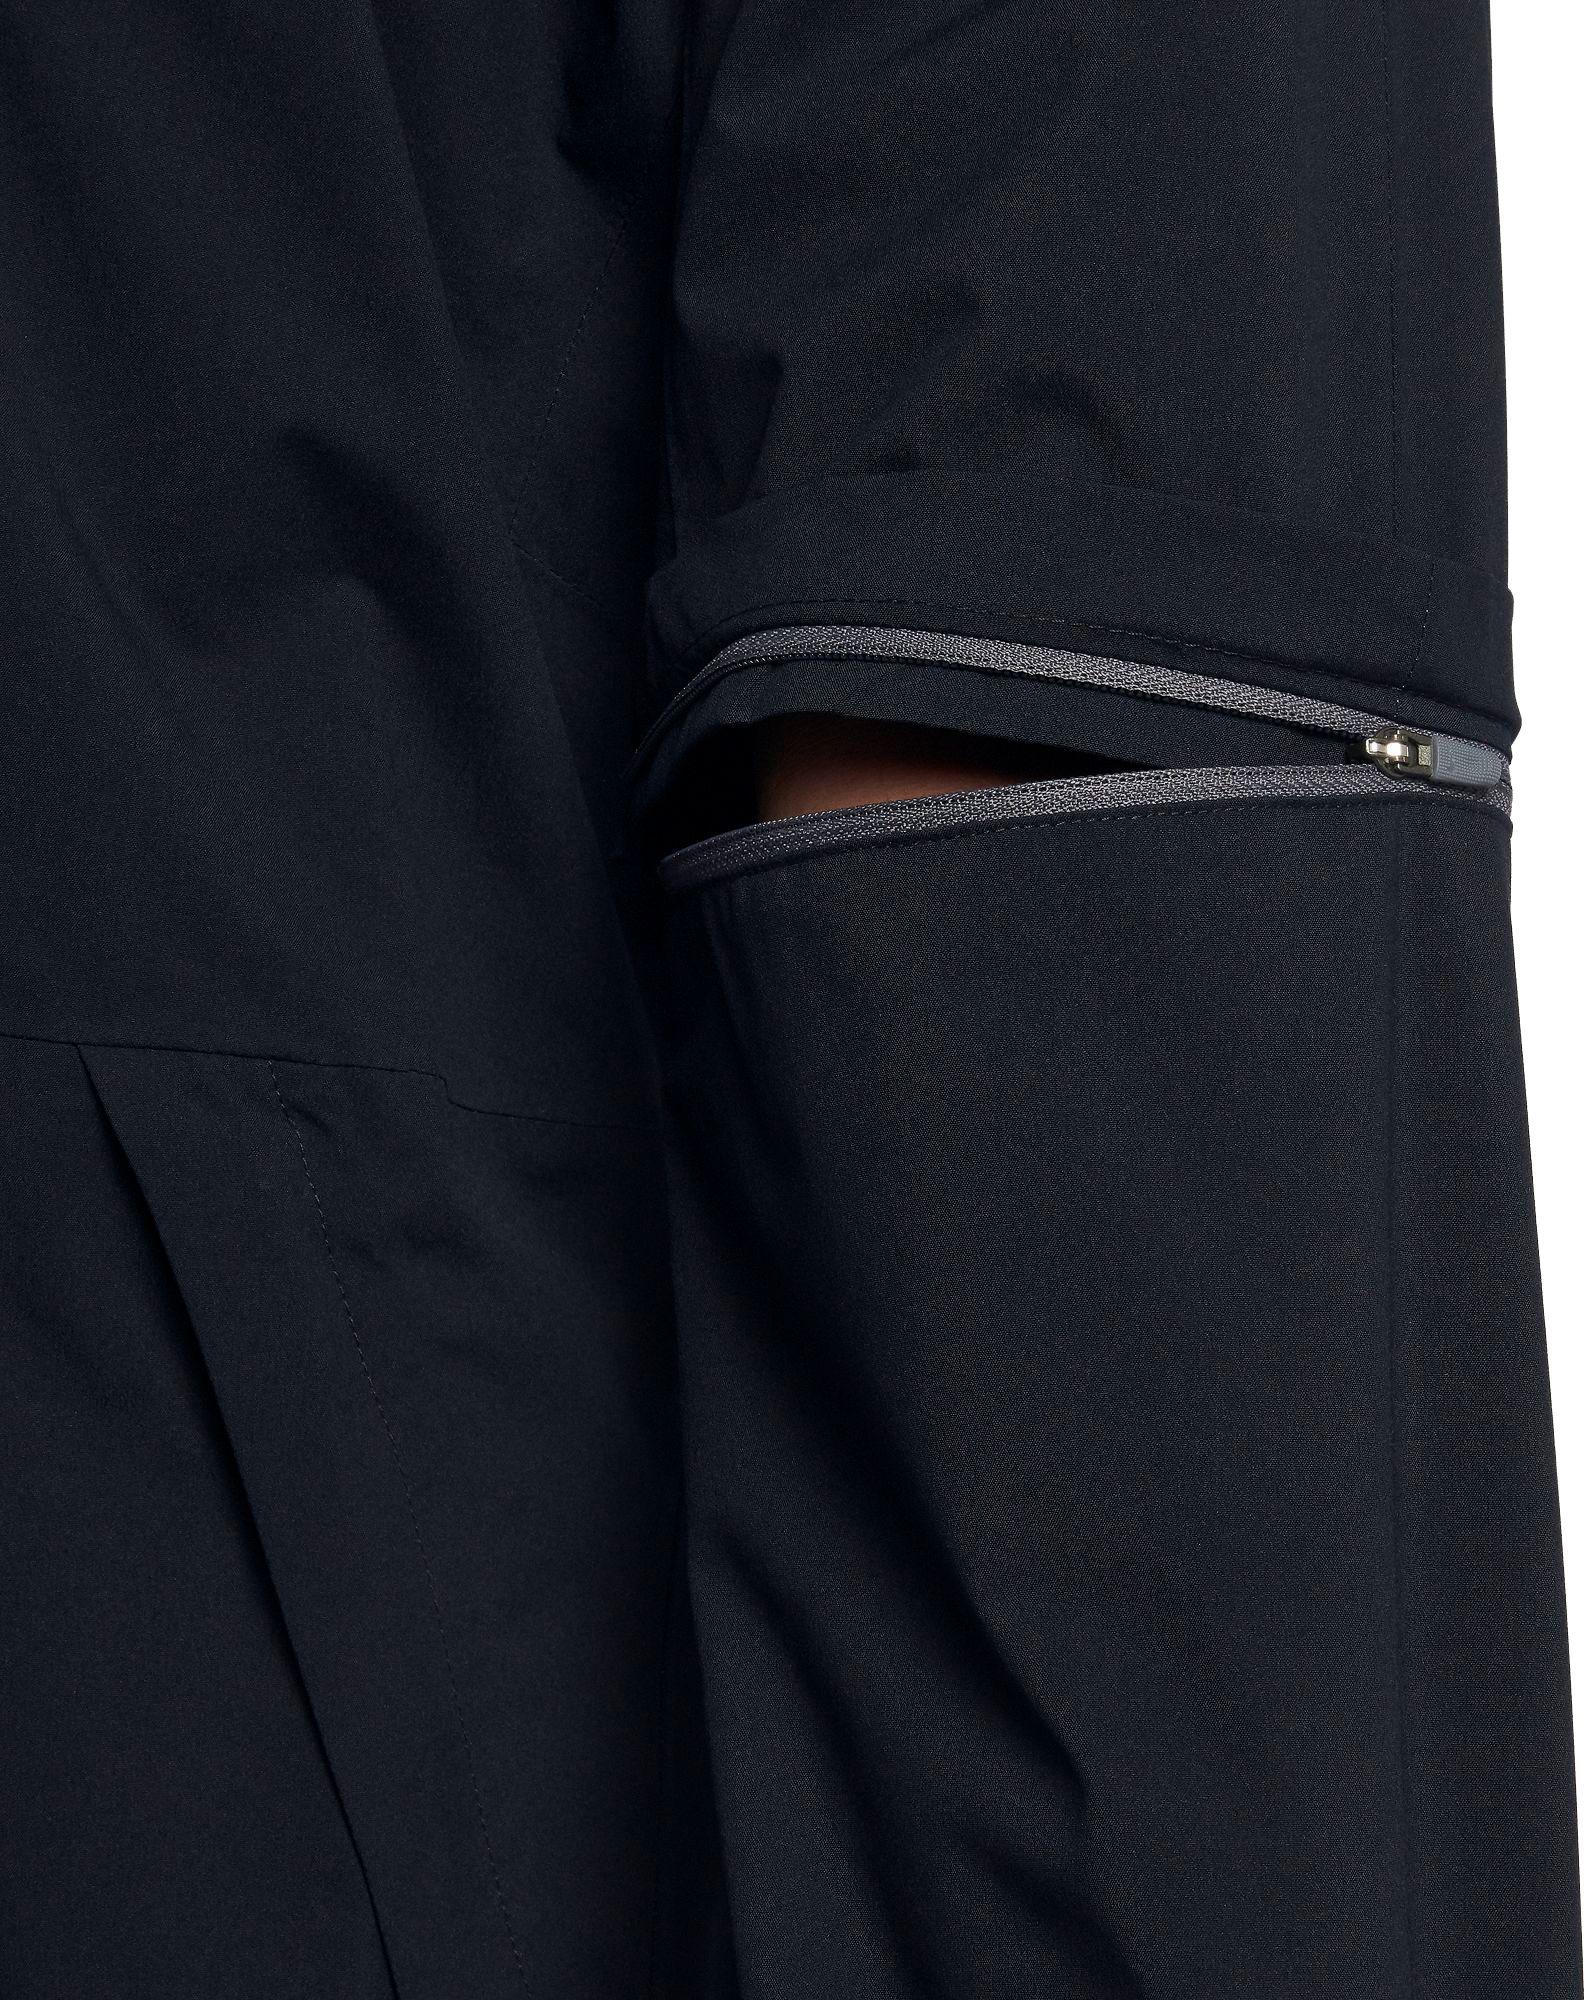 Nike Synthetic Hypershield Golf Rain Jacket in Black for Men - Lyst